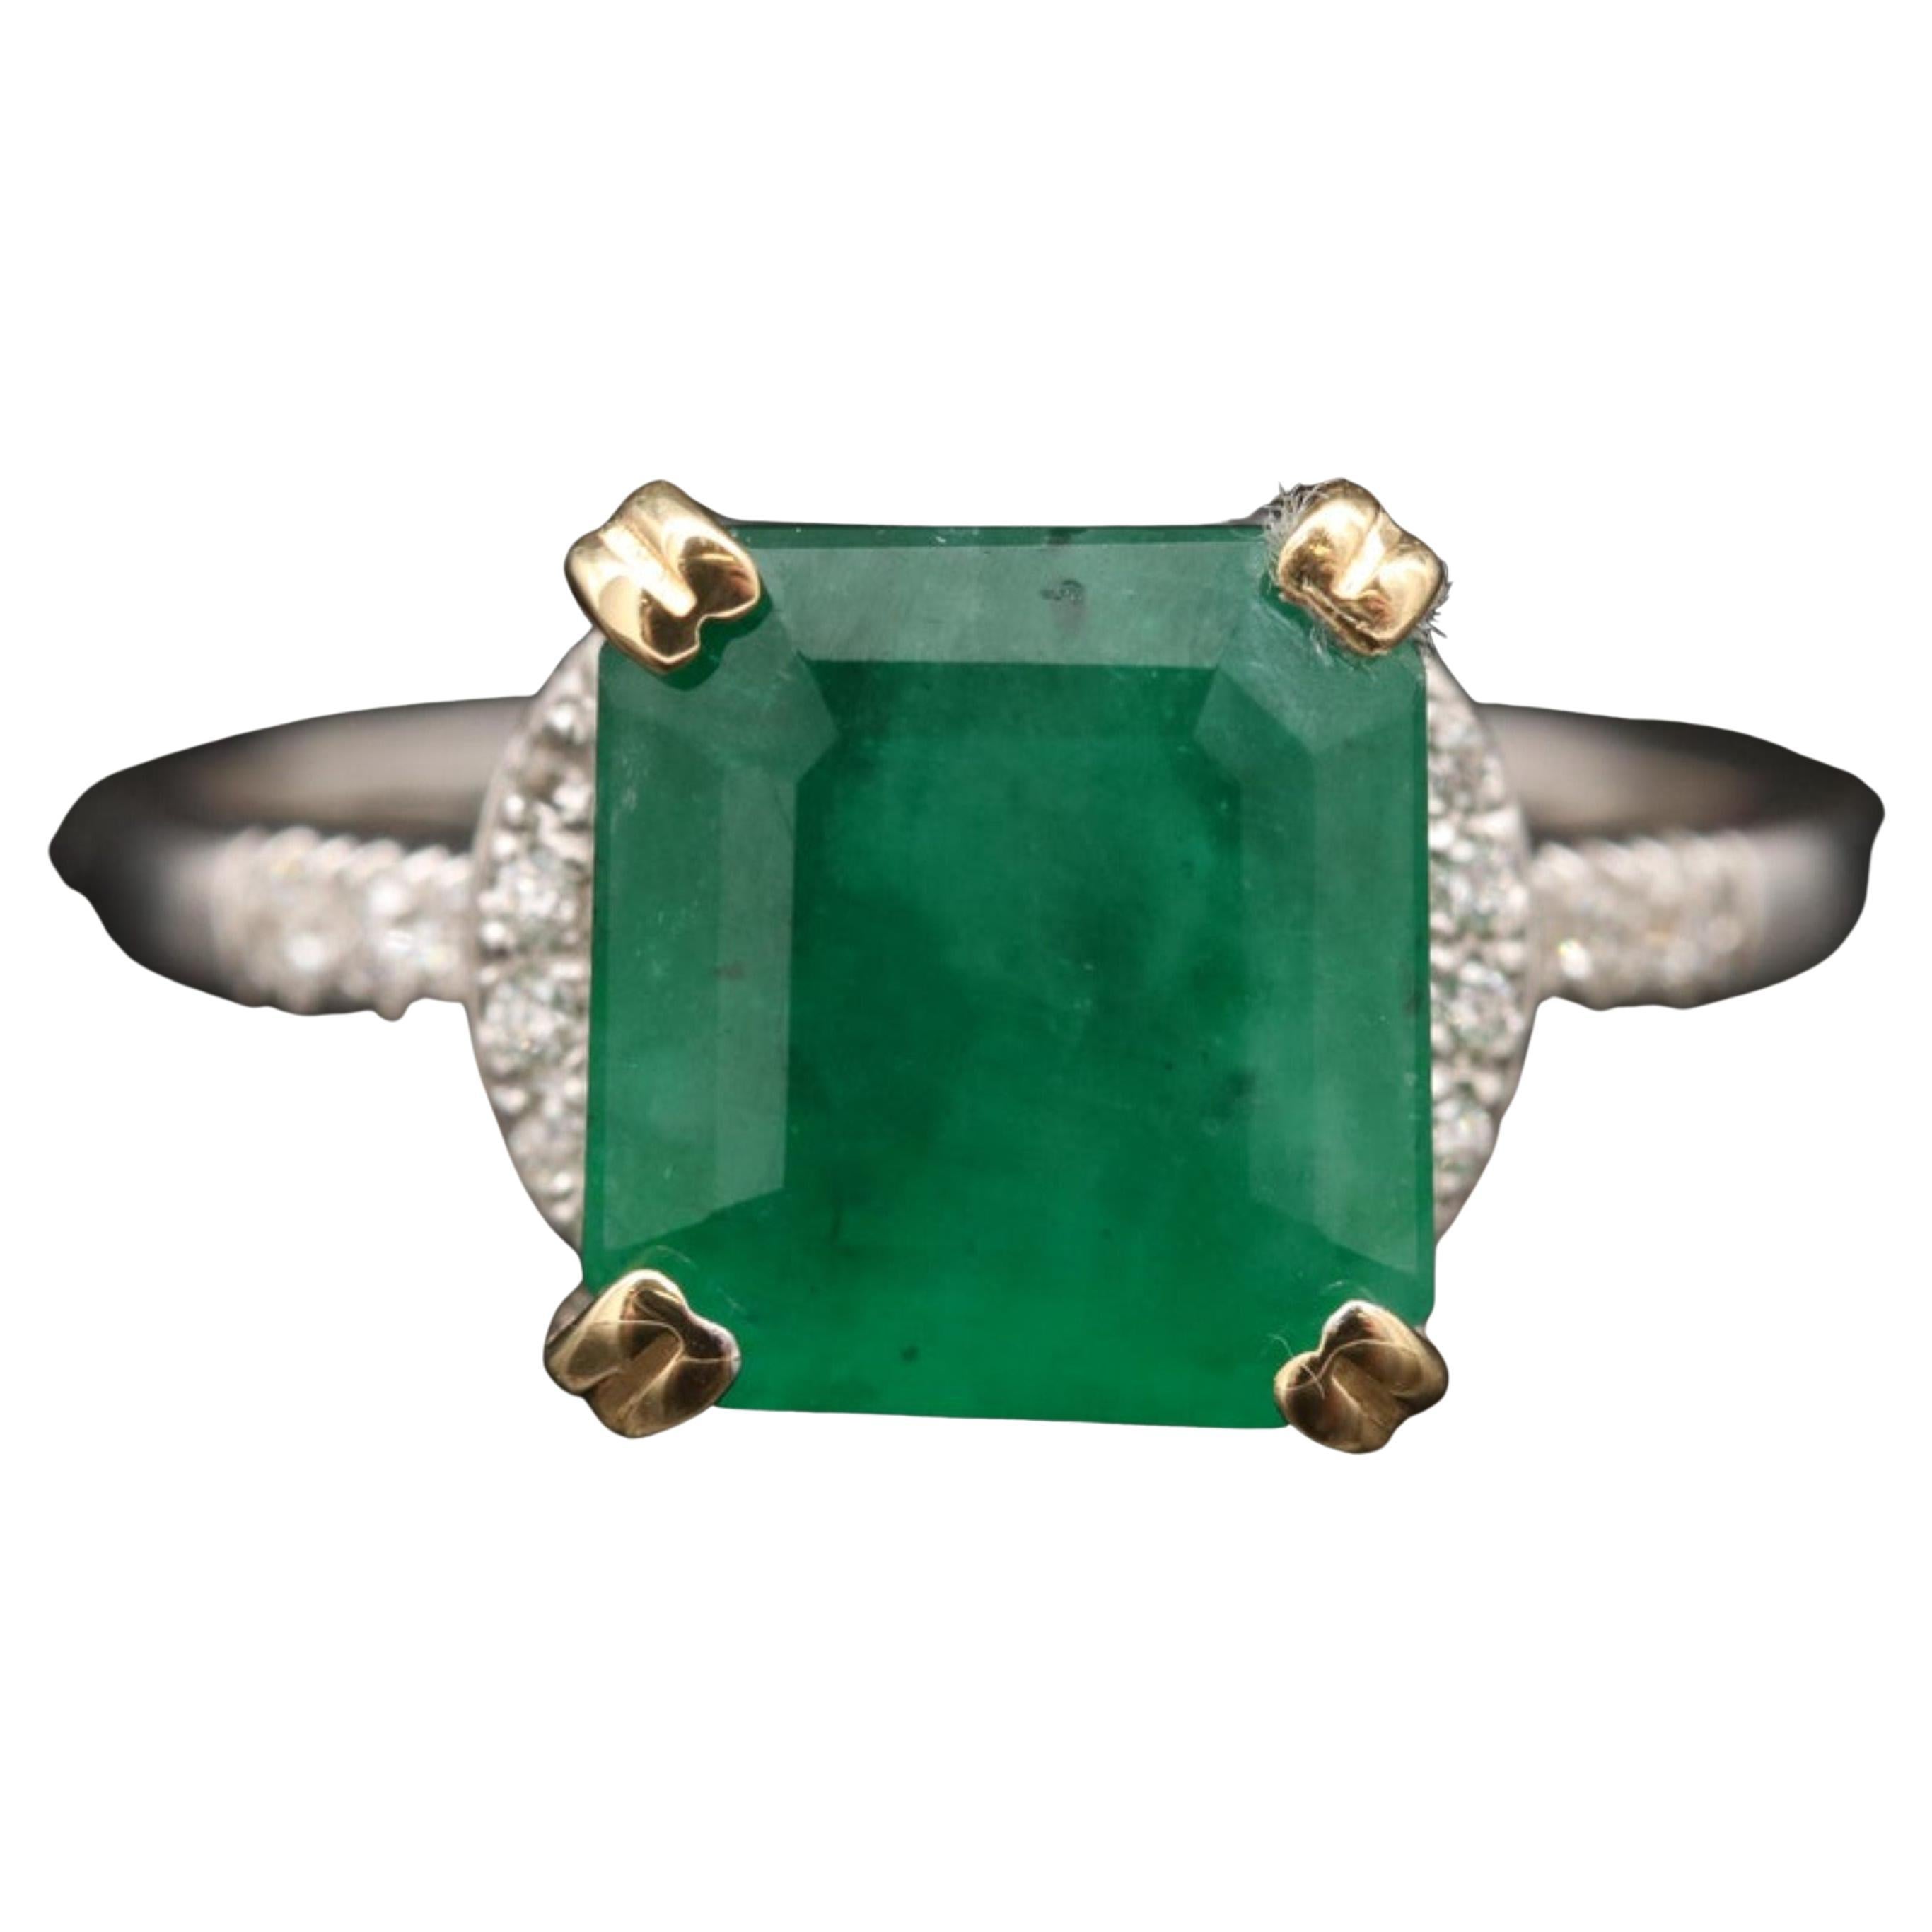 For Sale:  3 Carat Natural Emerald Engagement Ring, Minimalist Diamond Wedding Ring